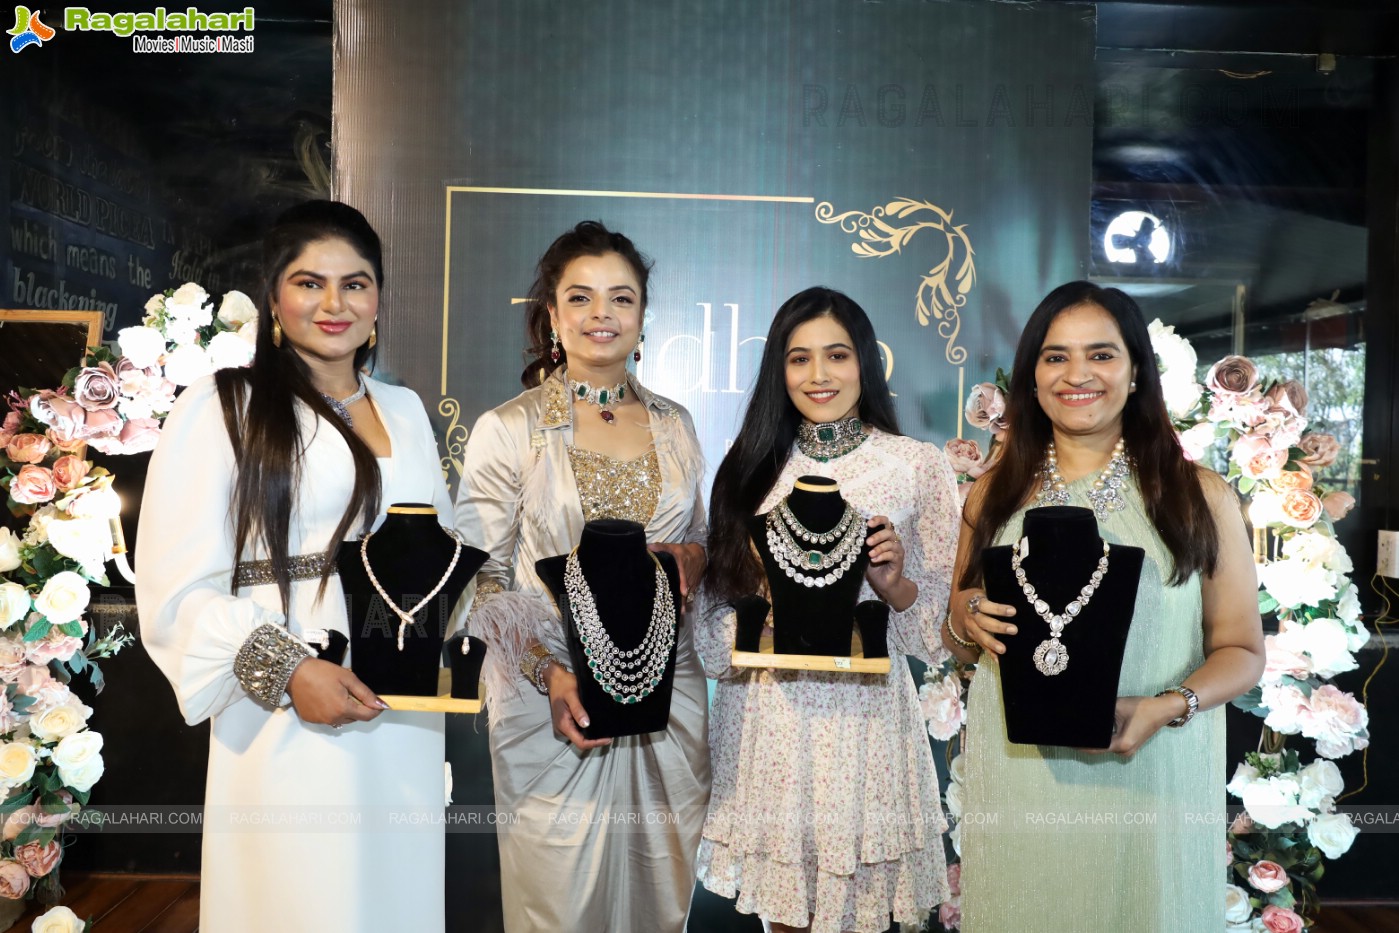  Tridhaa's Jewellery Launch Event in Hyderabad